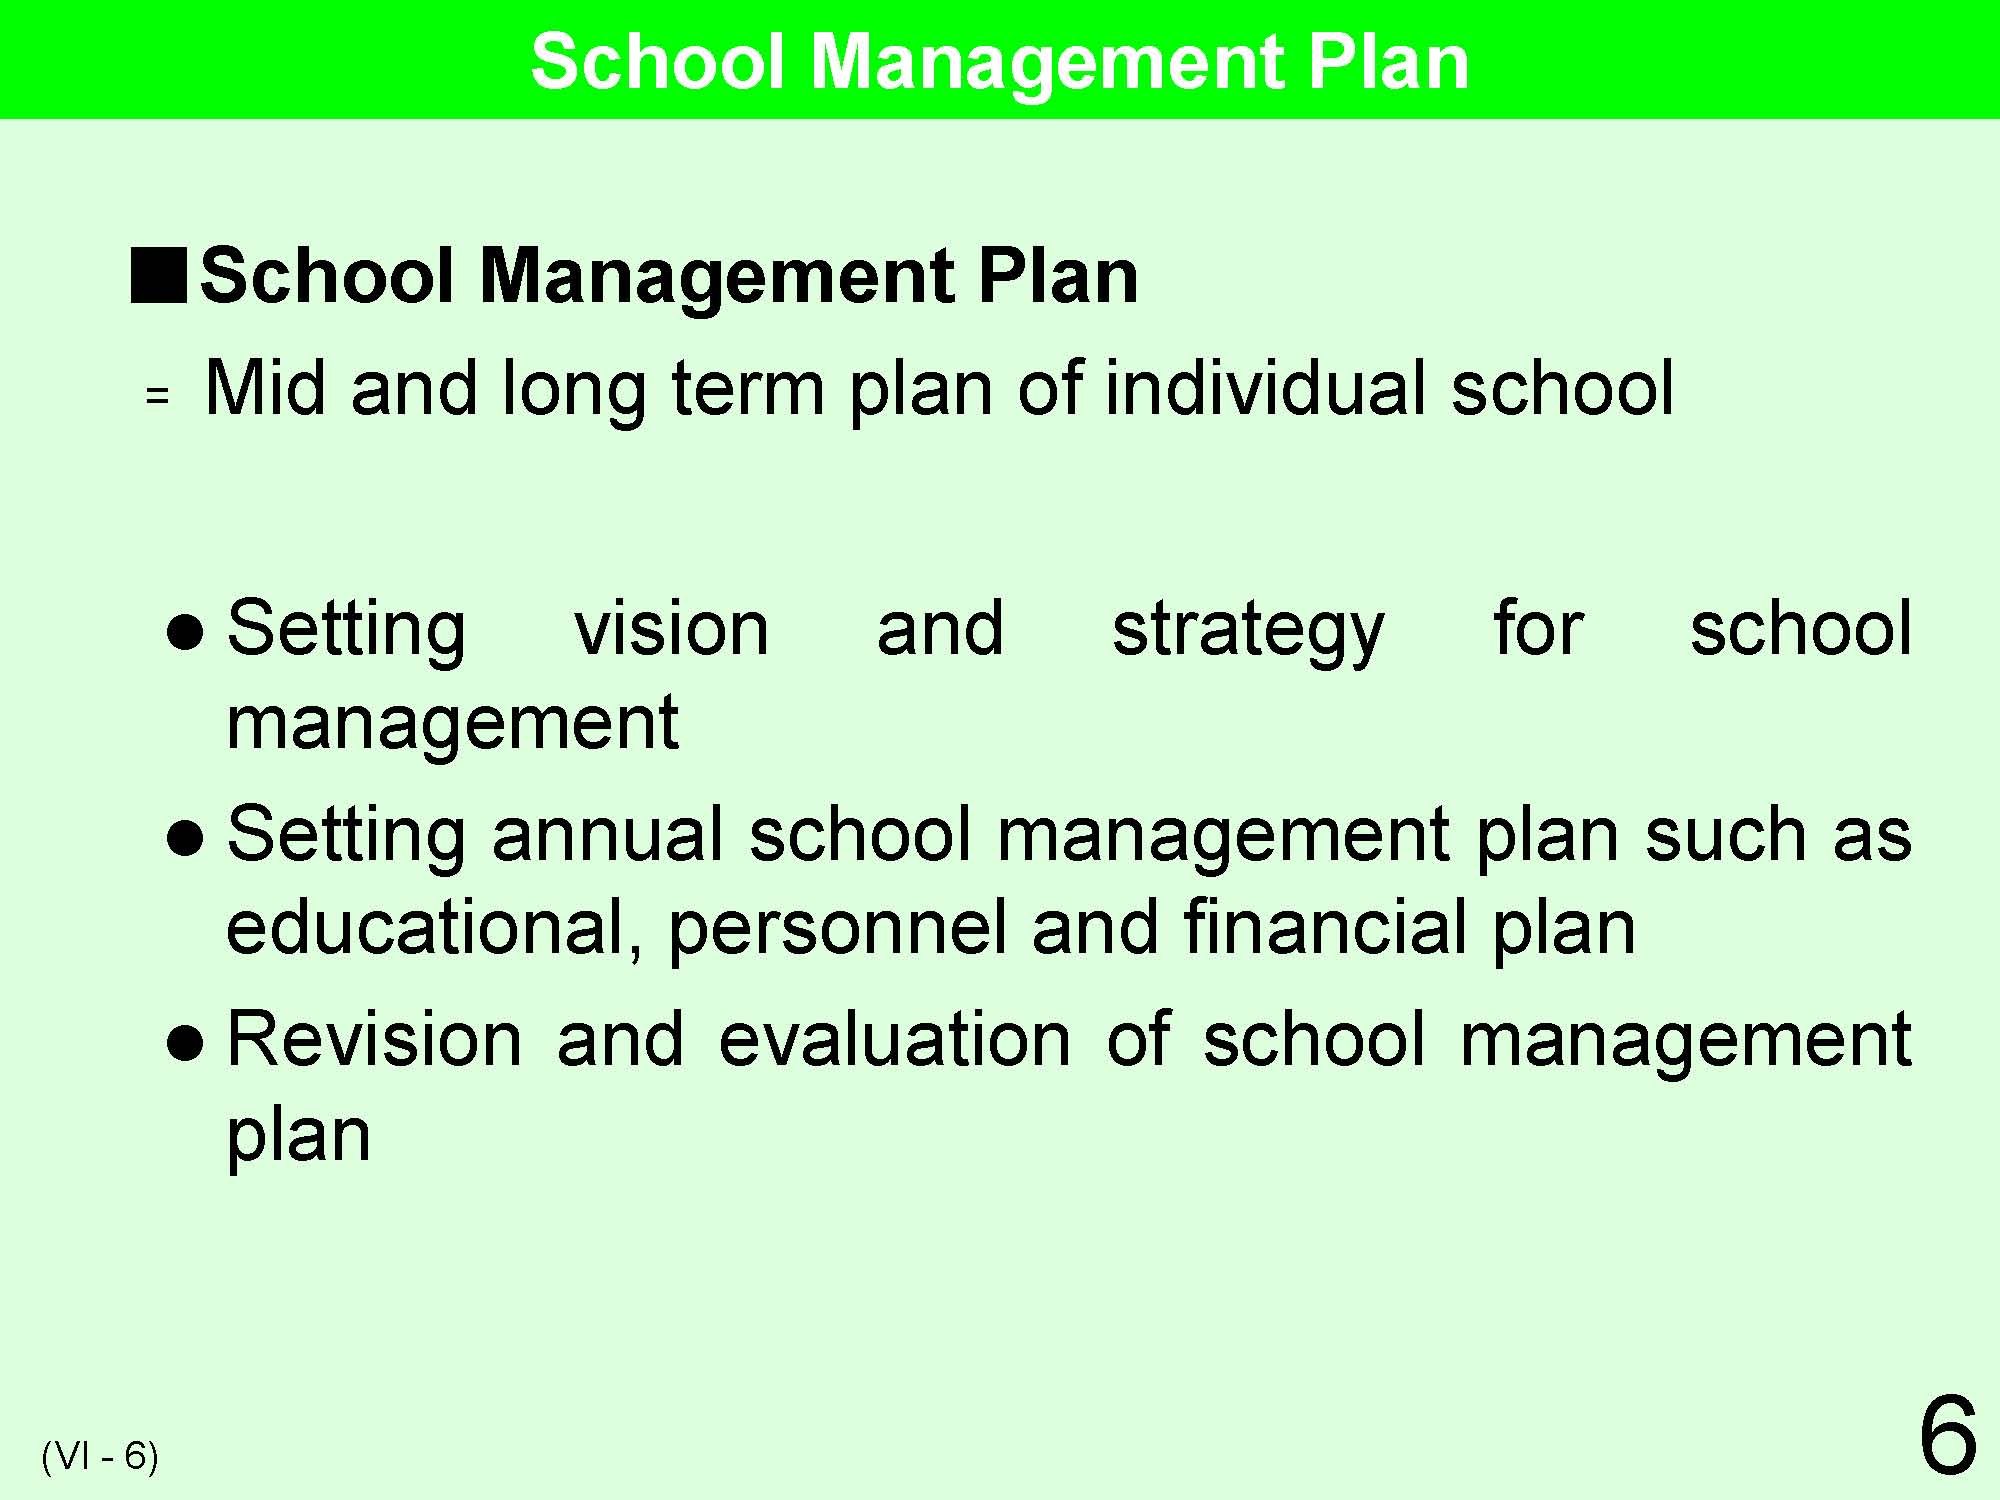 VI School Management